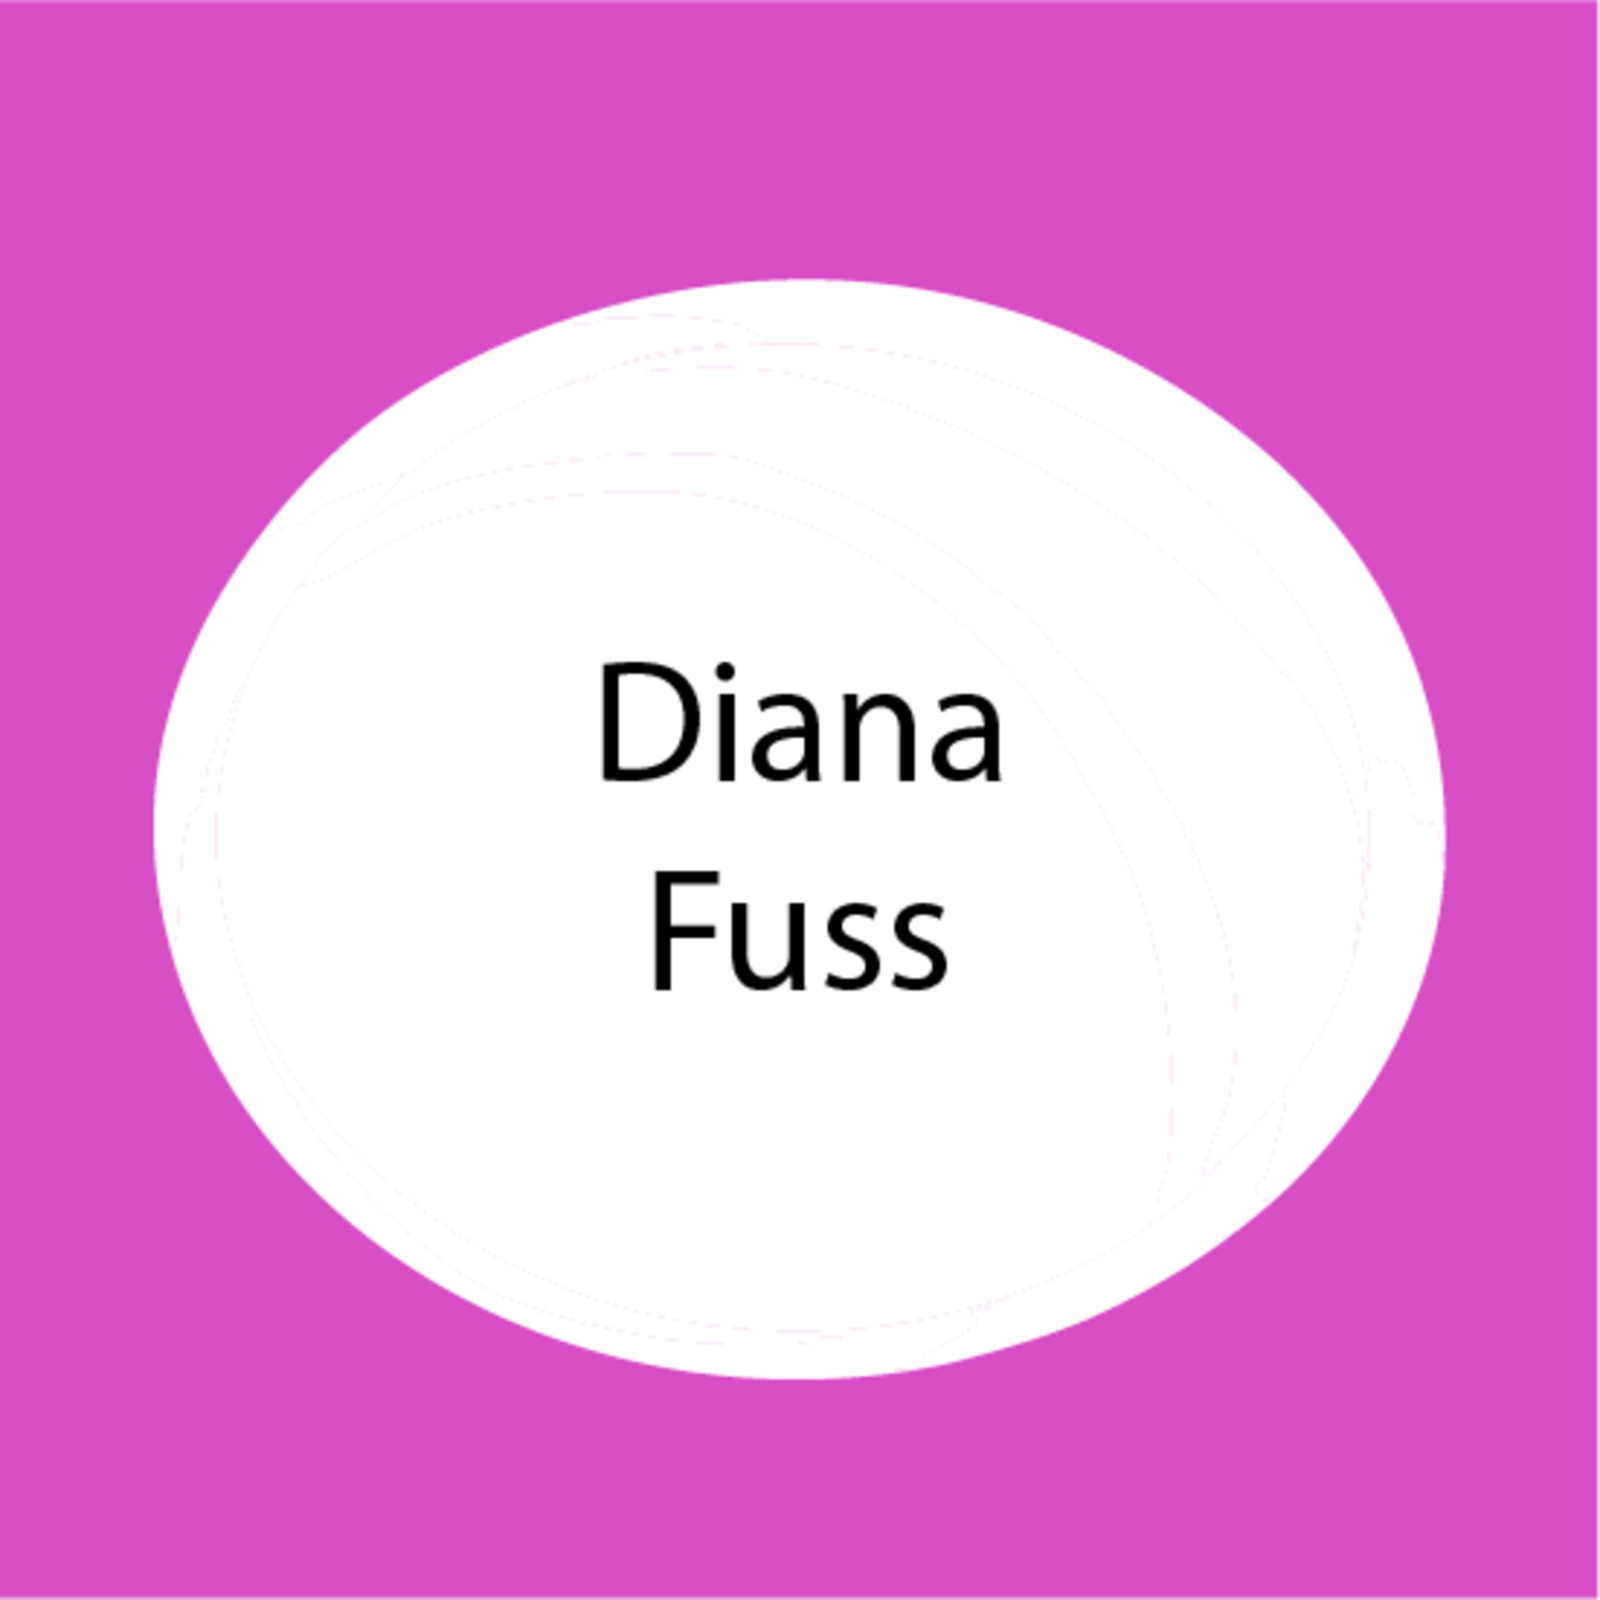 Diana Fuss